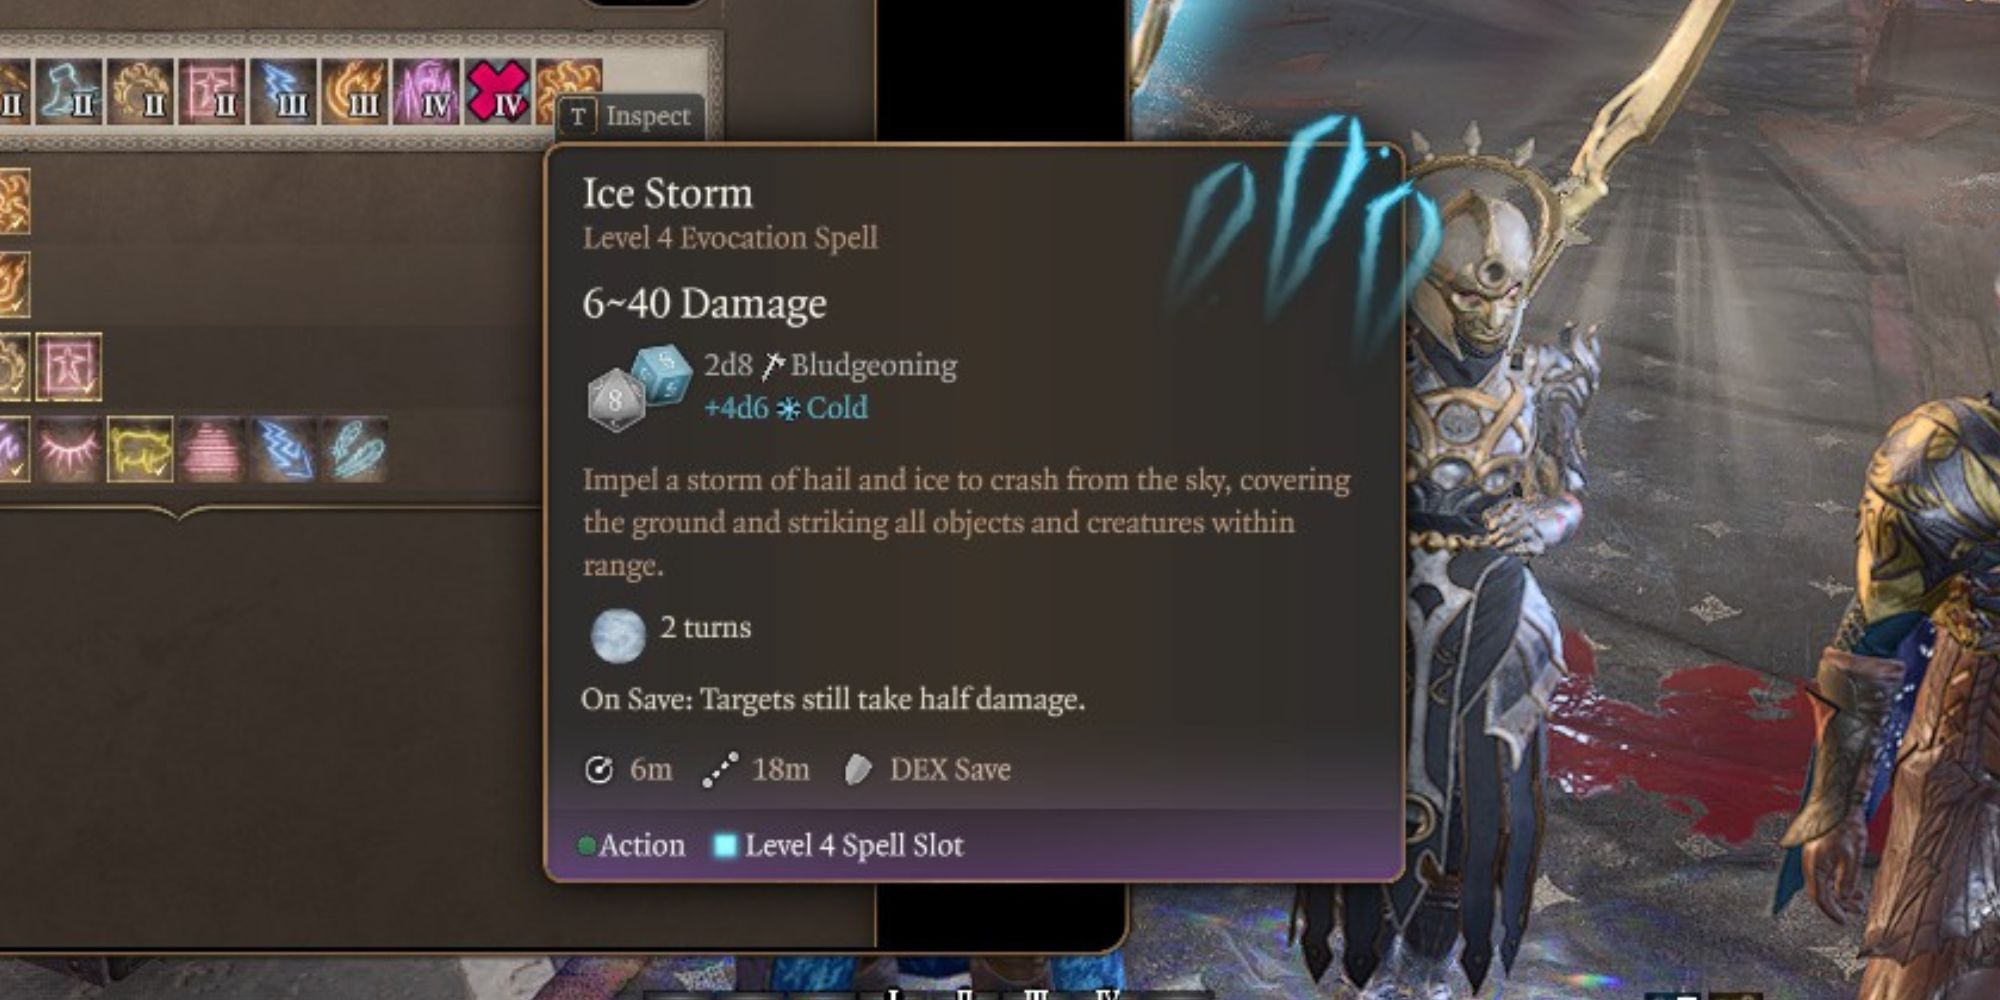 The Ice Storm spell in Baldur's Gate 3